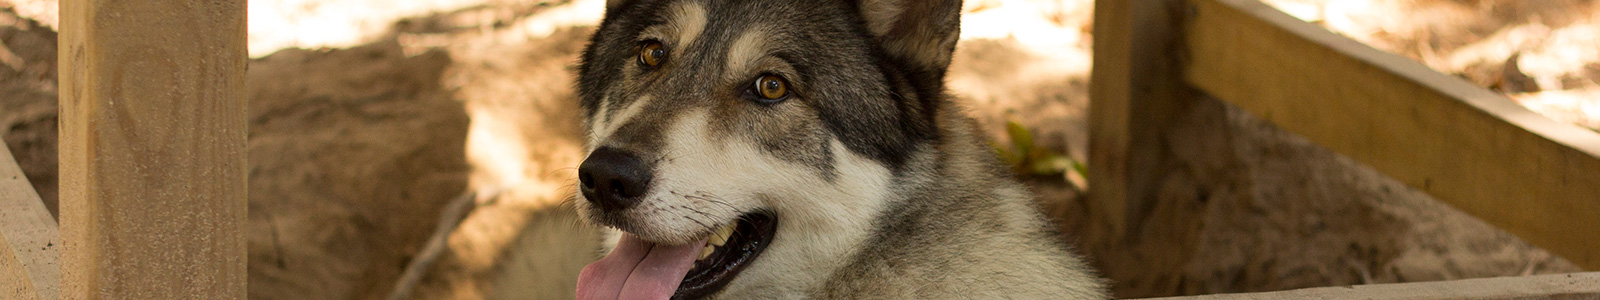 Texas Wolfdog Project Thank You! Header Image